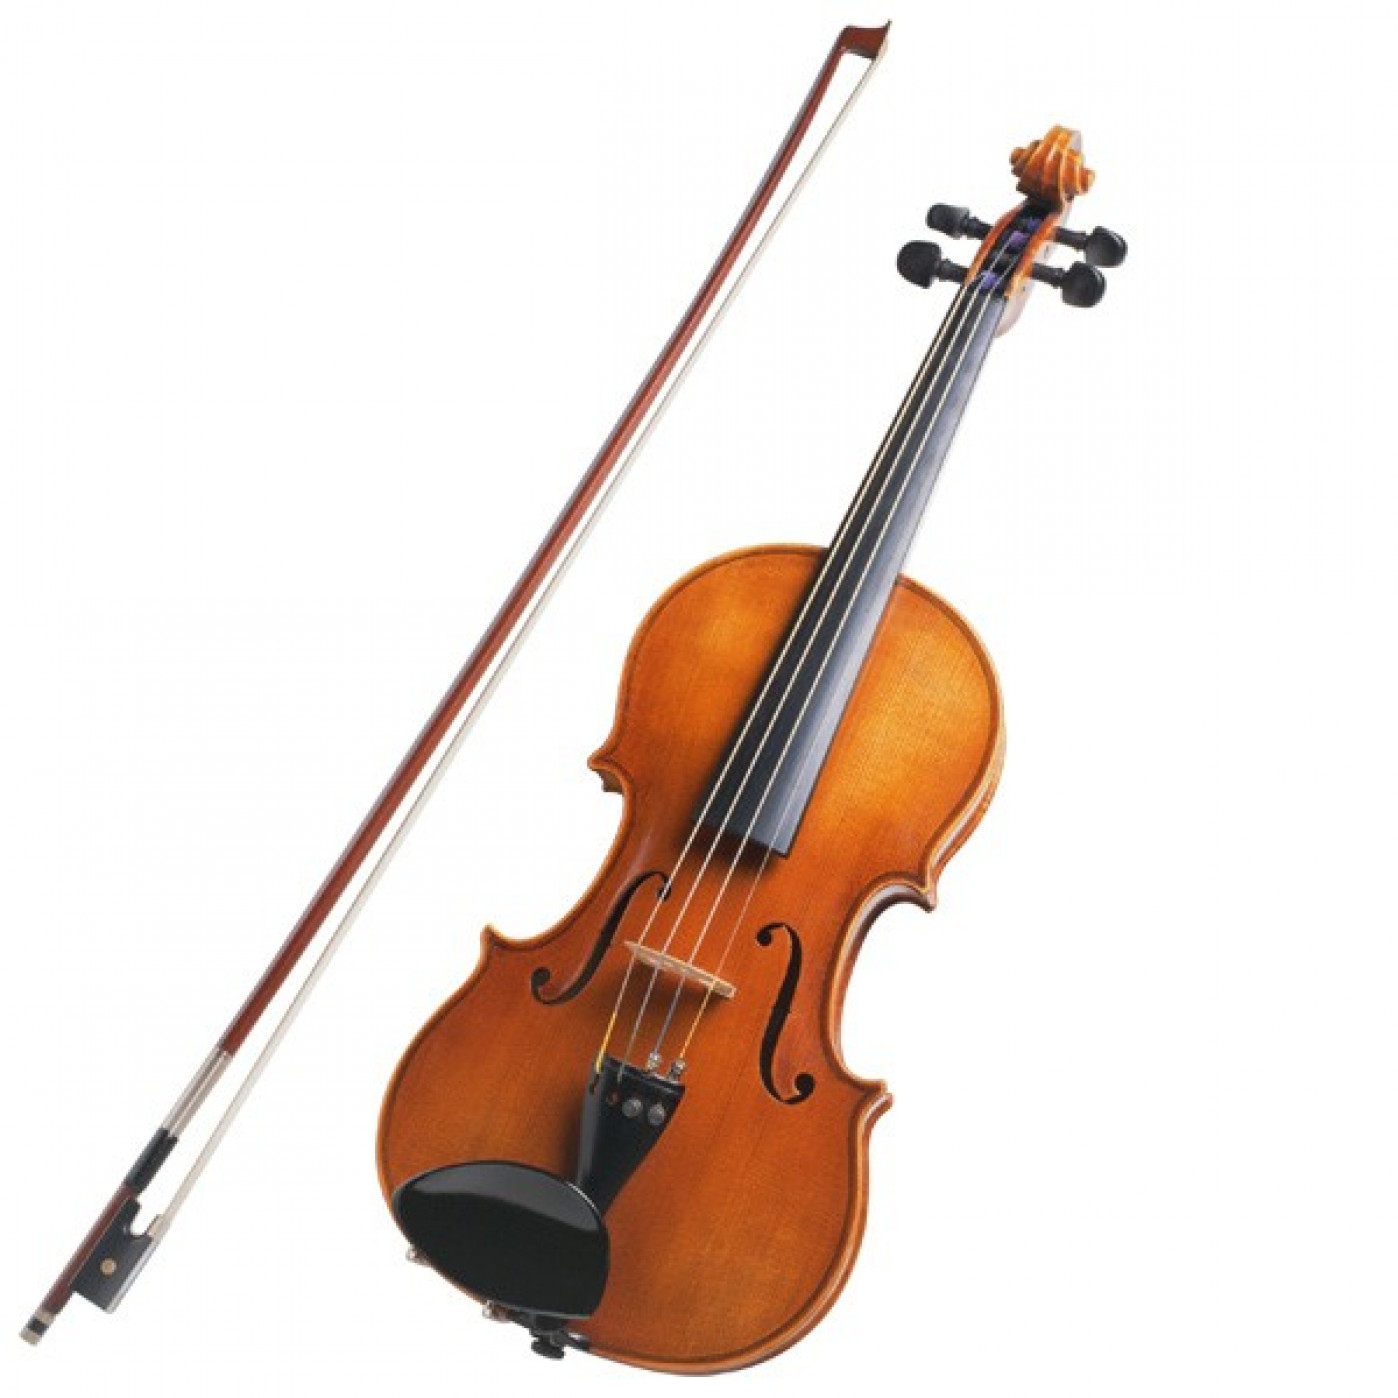 Violin instruments. Скрипка Hans Klein HKV 2. Скрипка Karl Heinlich thn 11 3/4. Скрипка Ганс Кляйн HKV-2 GW 4/4. Скрипка Caraya MV-002 3/4.